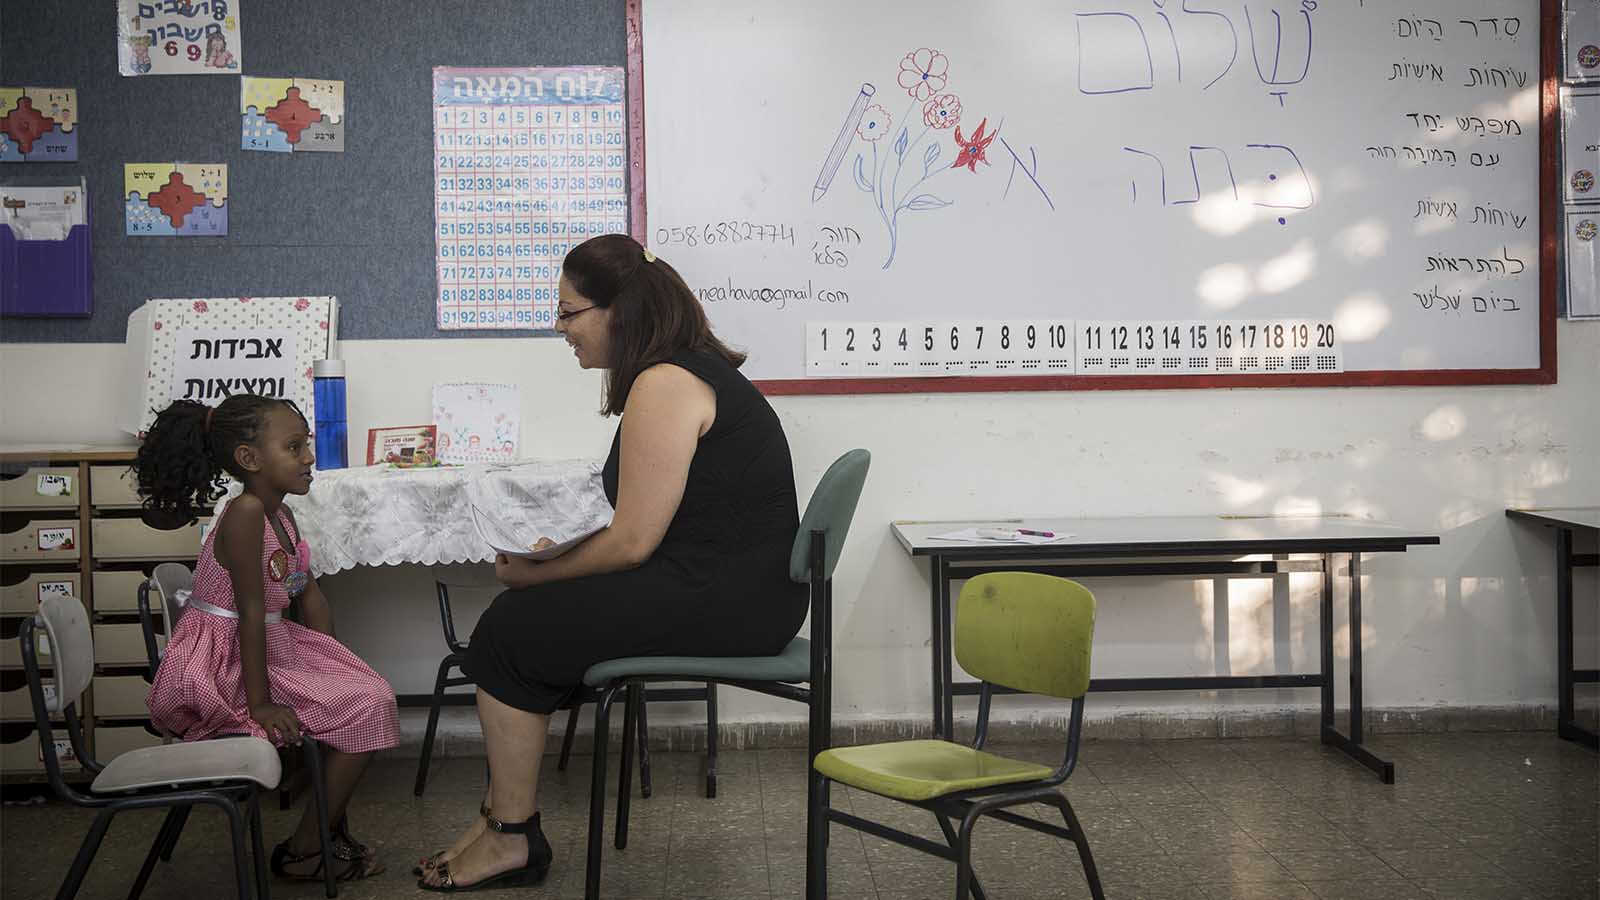 Children attend orientation to first grade at Paula Ben Gurion elementary school in Jerusalem on August 30, 2015. (Photo by Hadas Parush/Flash 90).